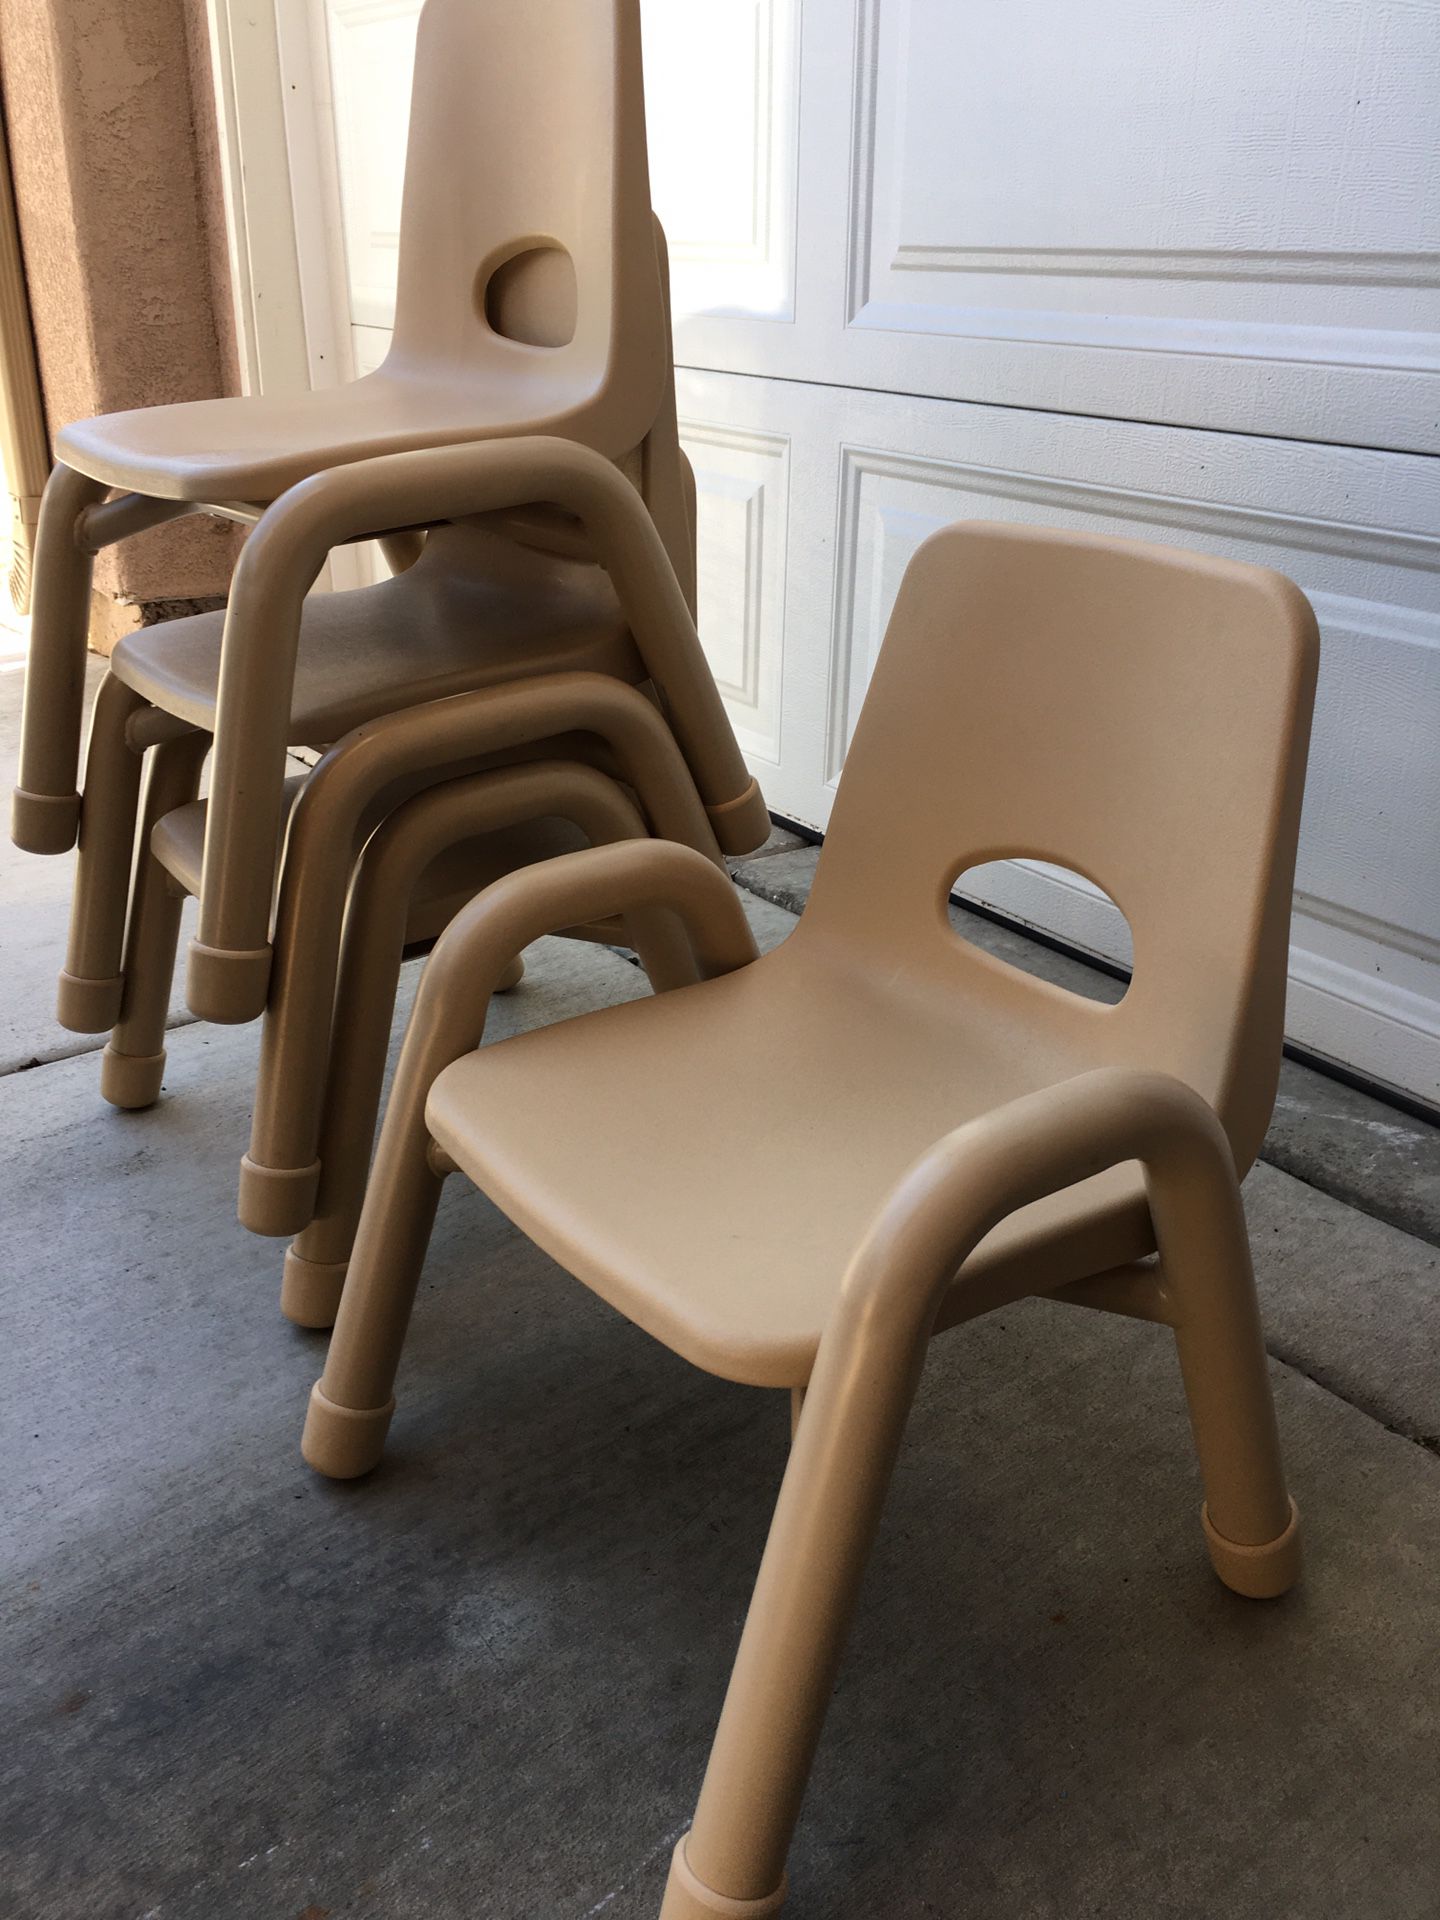 Lakeshore Chair for kids / children 11 1/2” high